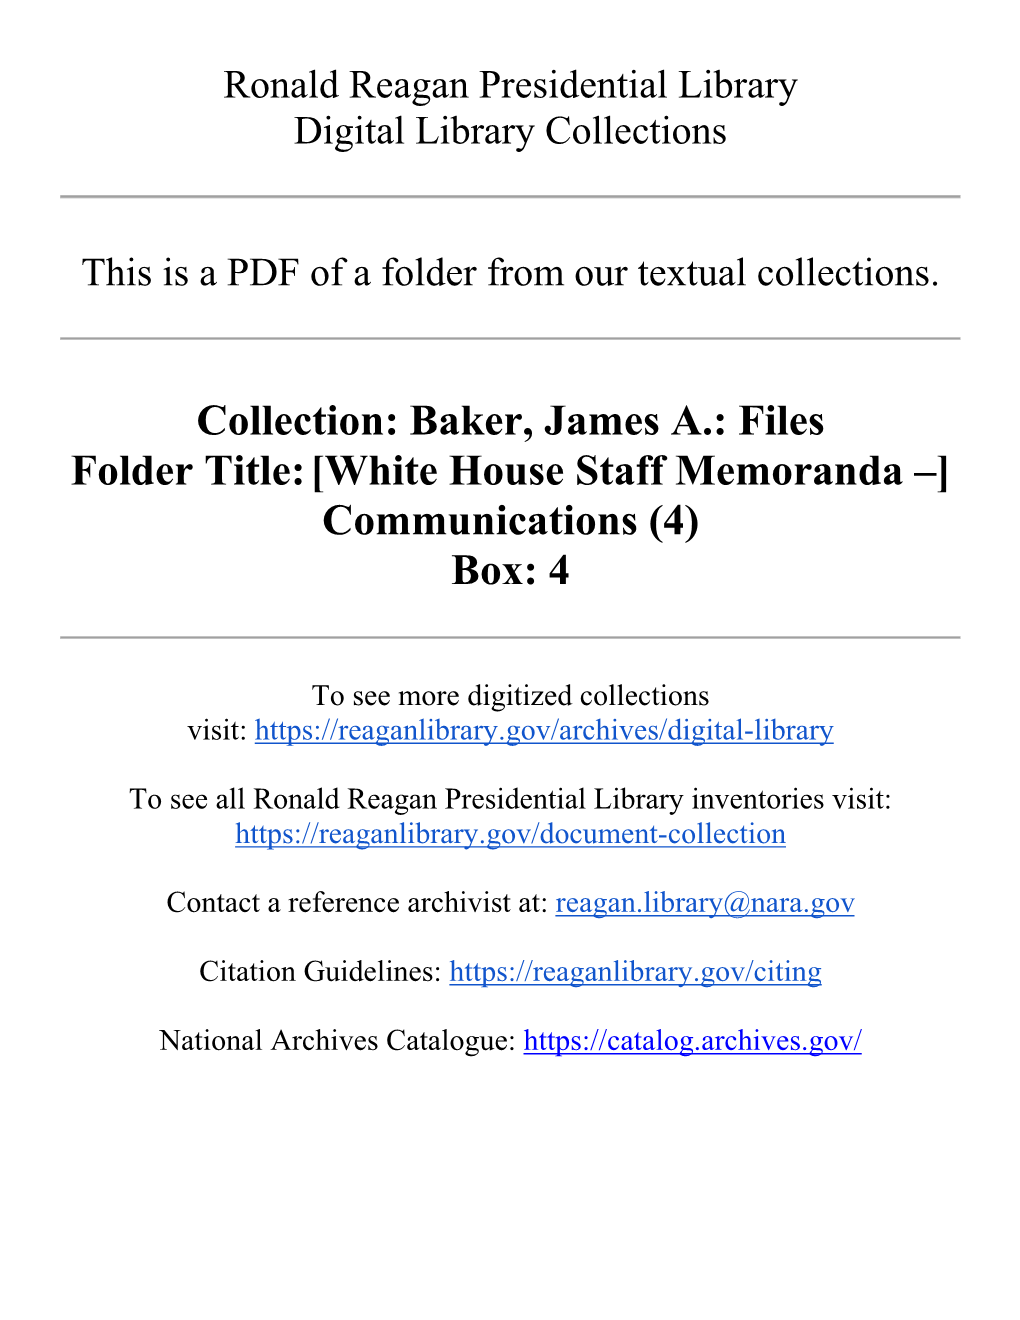 Baker, James A.: Files Folder Title: [White House Staff Memoranda –] Communications (4) Box: 4